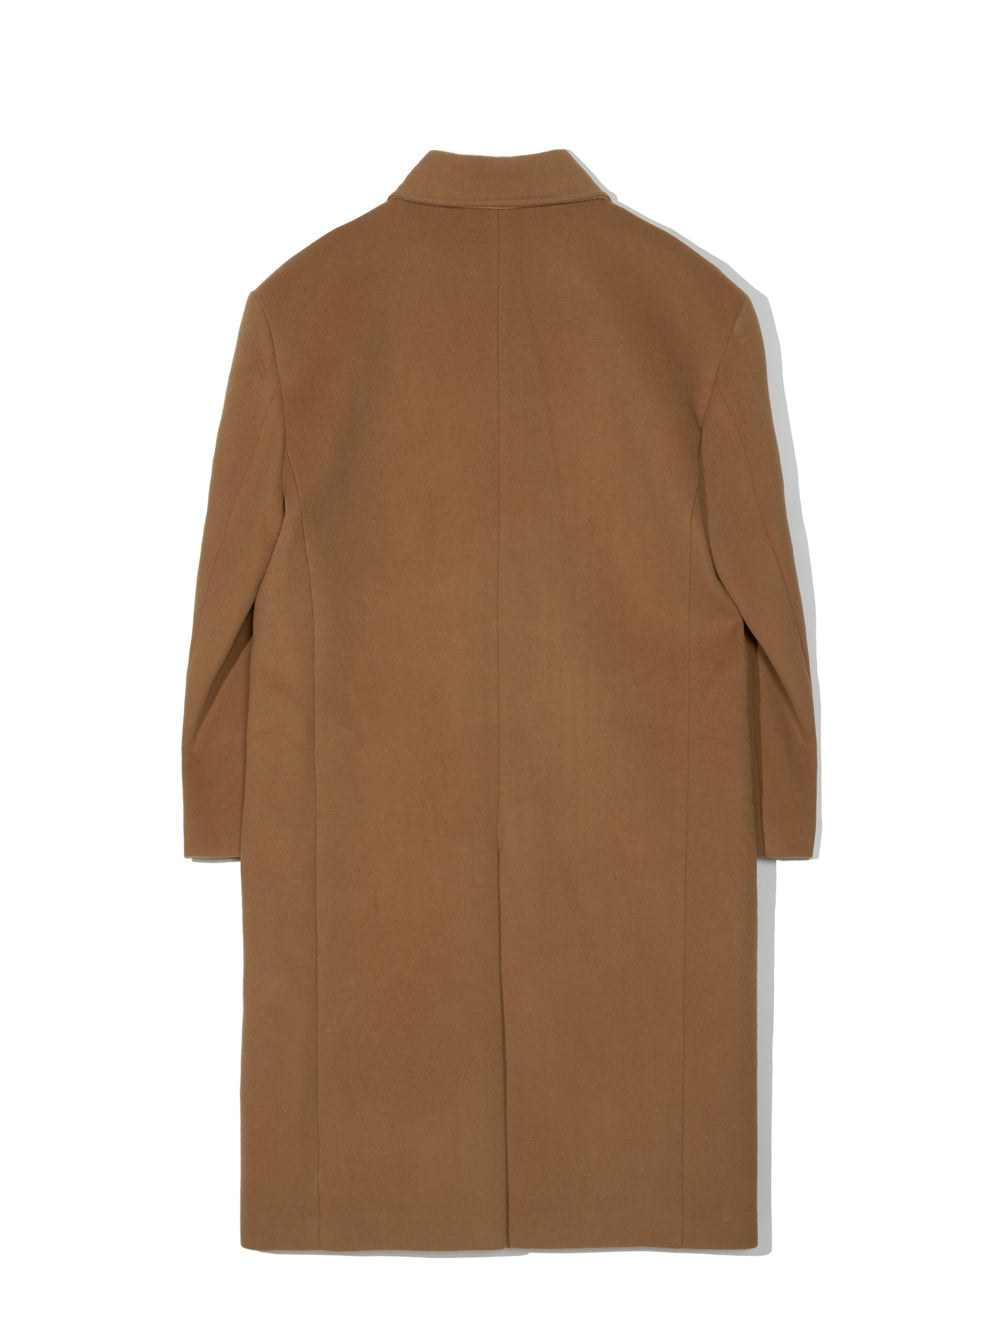 Wool Oversized Single Button Coat in Camel